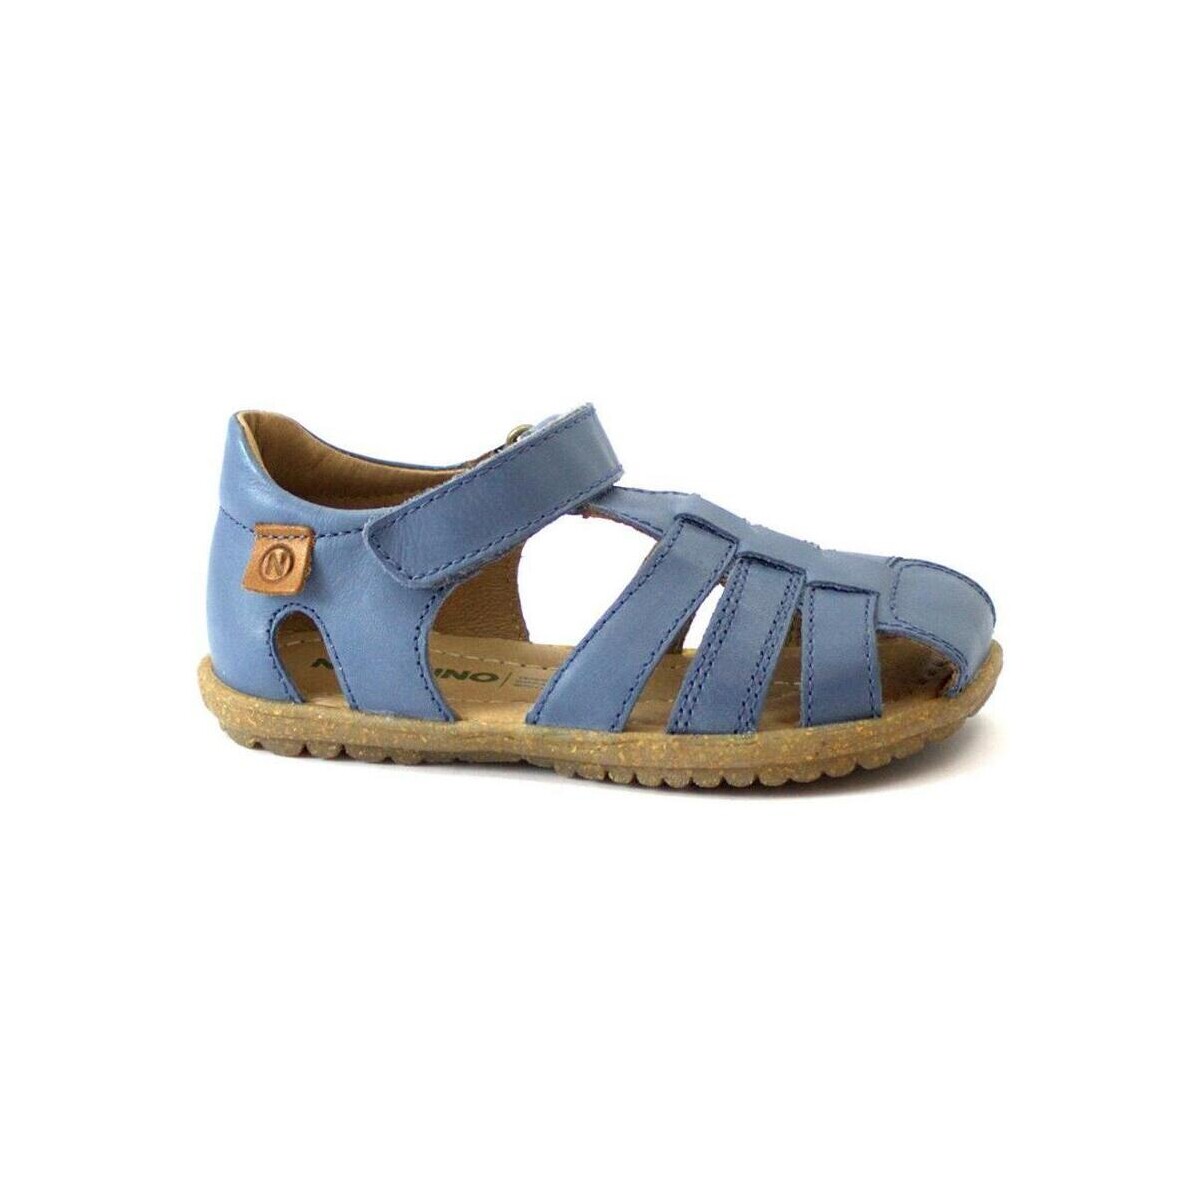 Schoenen Kinderen Sandalen / Open schoenen Naturino NAT-CCC-0724-CE Blauw